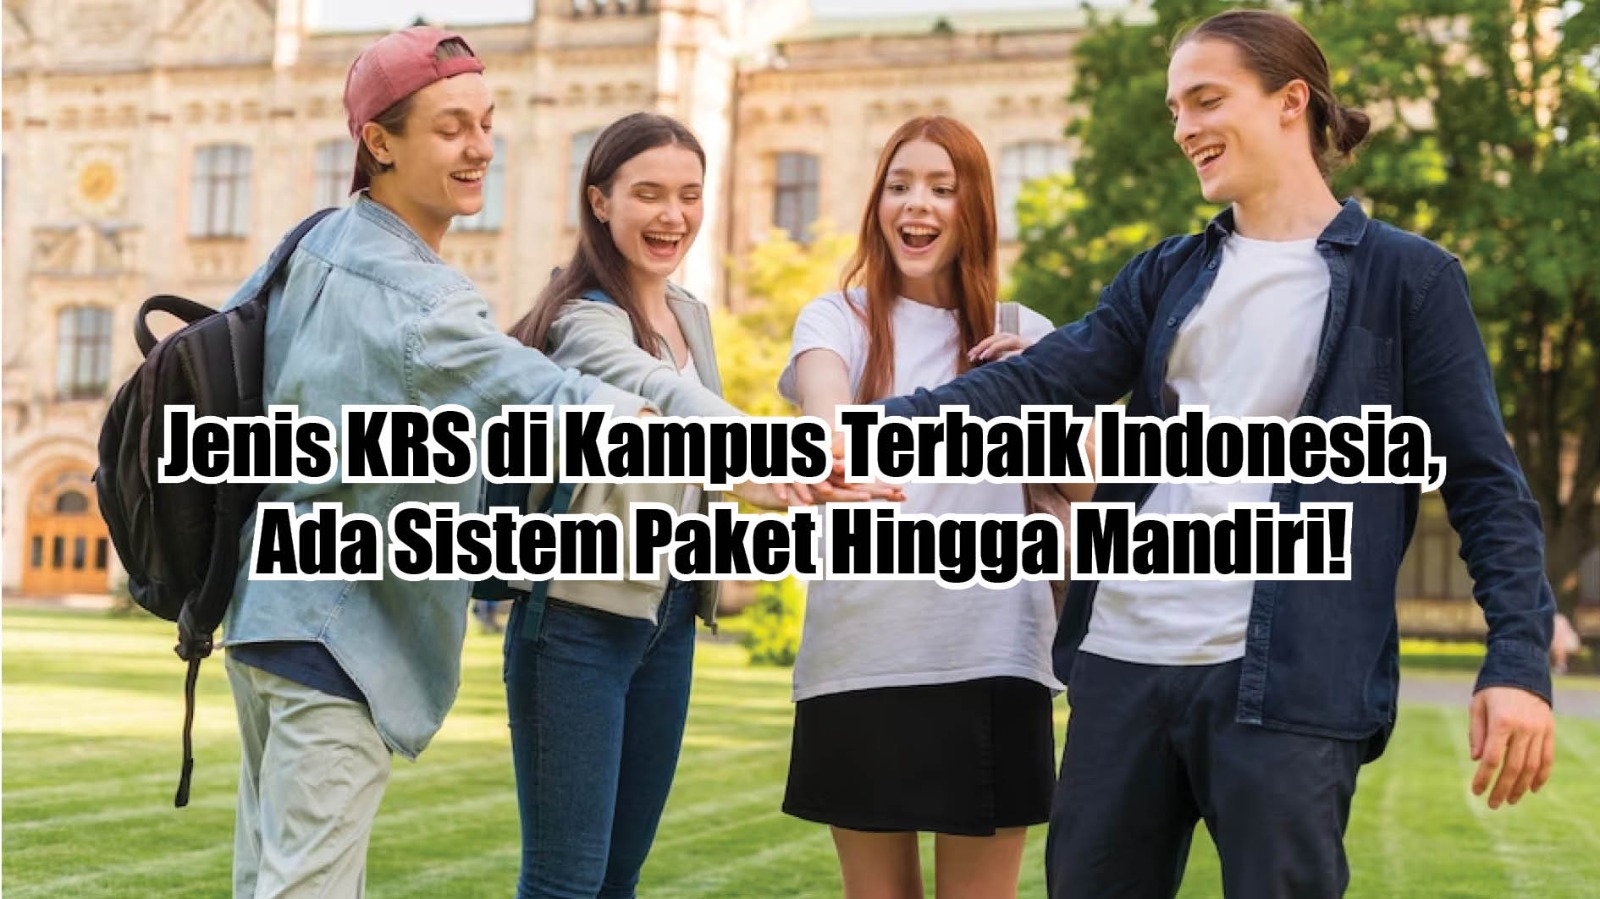 Maba Wajib Tahu! 3 Jenis KRS di Kampus Terbaik Indonesia, Ada Sistem Paket Hingga Mandiri!